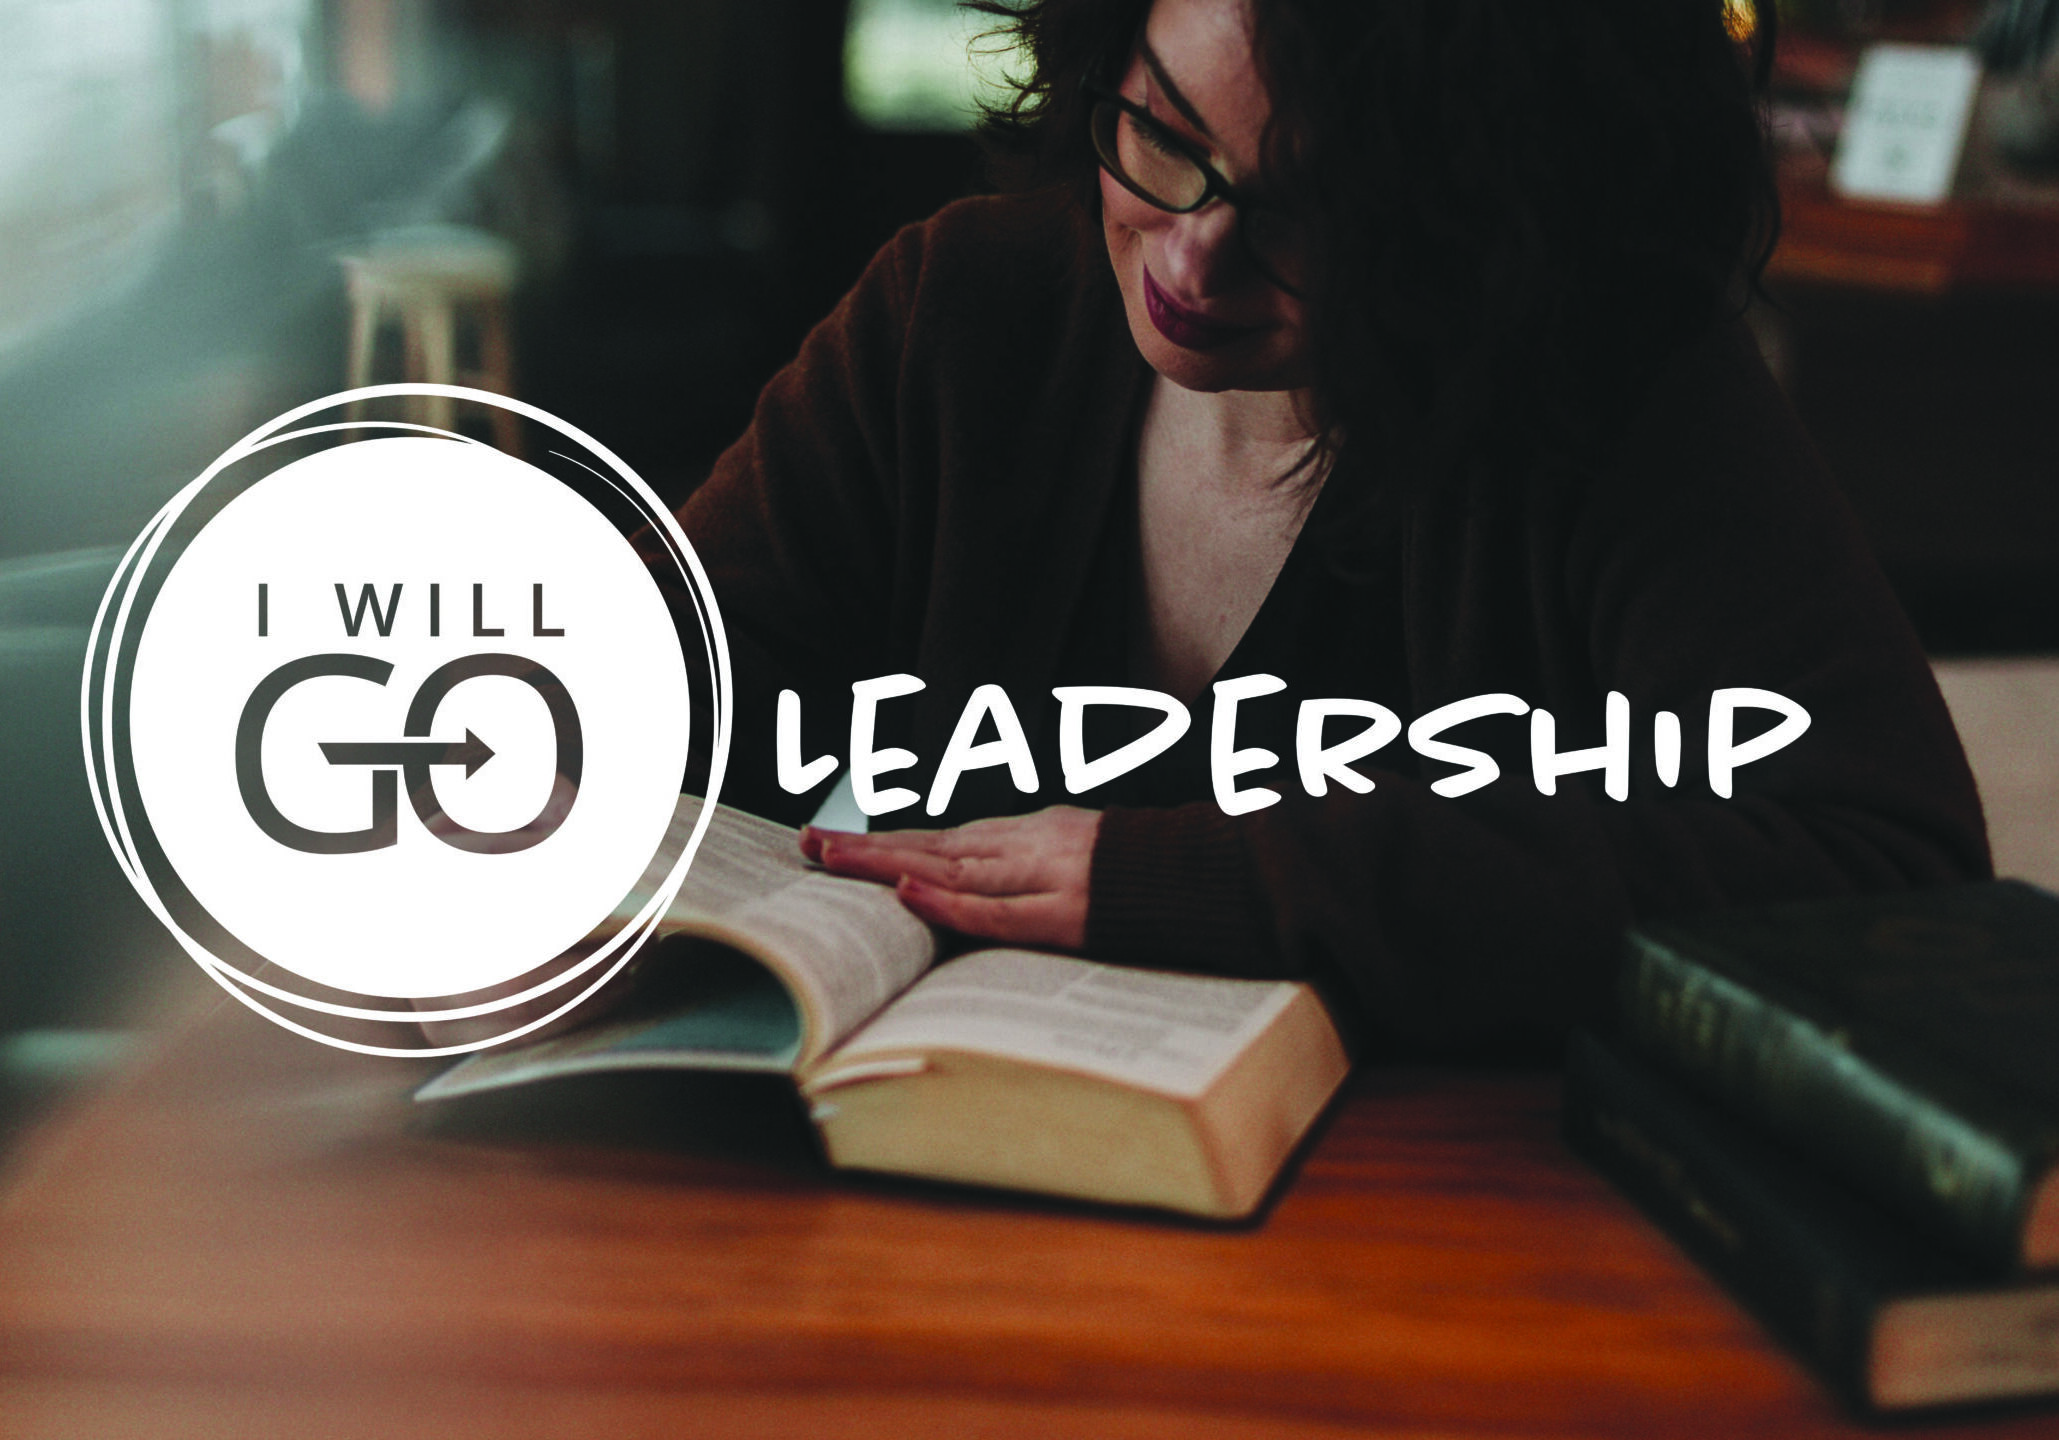 https___iwillgo2020.org_wp-content_uploads_2020_07_Leadership-2-scaled